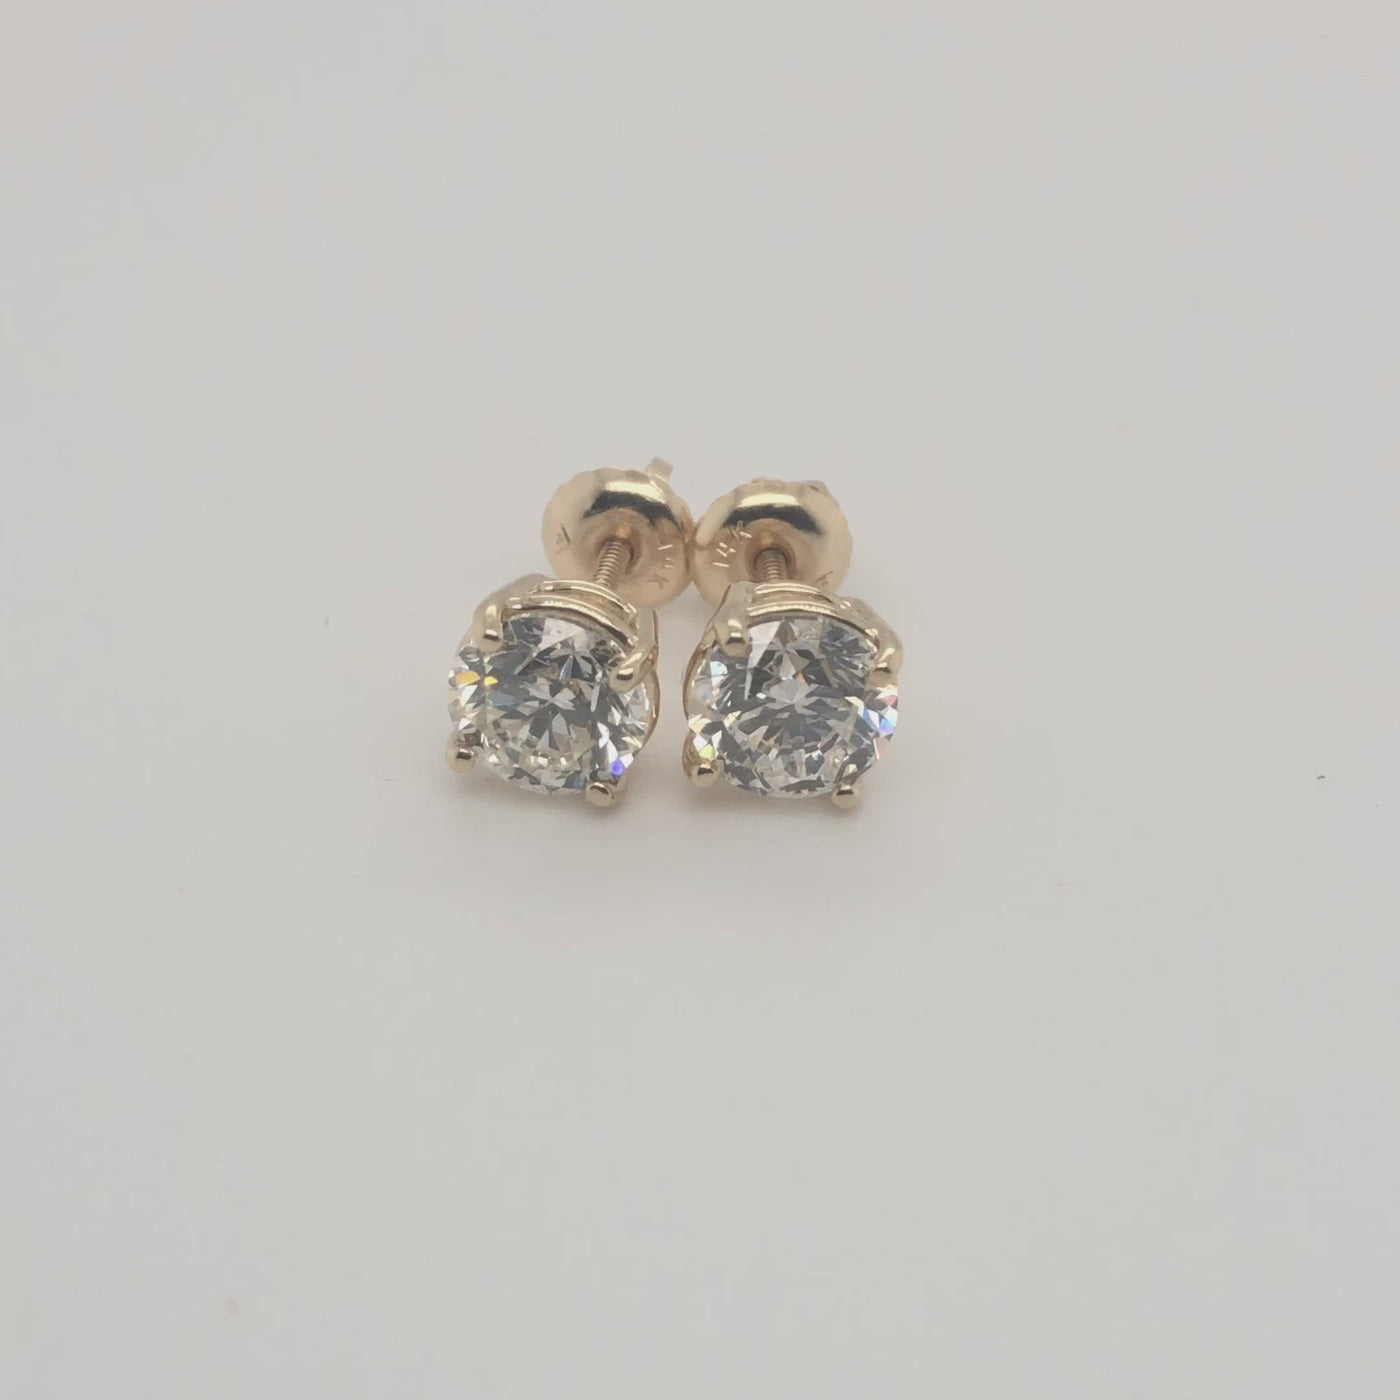 4-Prong Round Cut Diamond Stud Earrings 1.50 ct. tw.